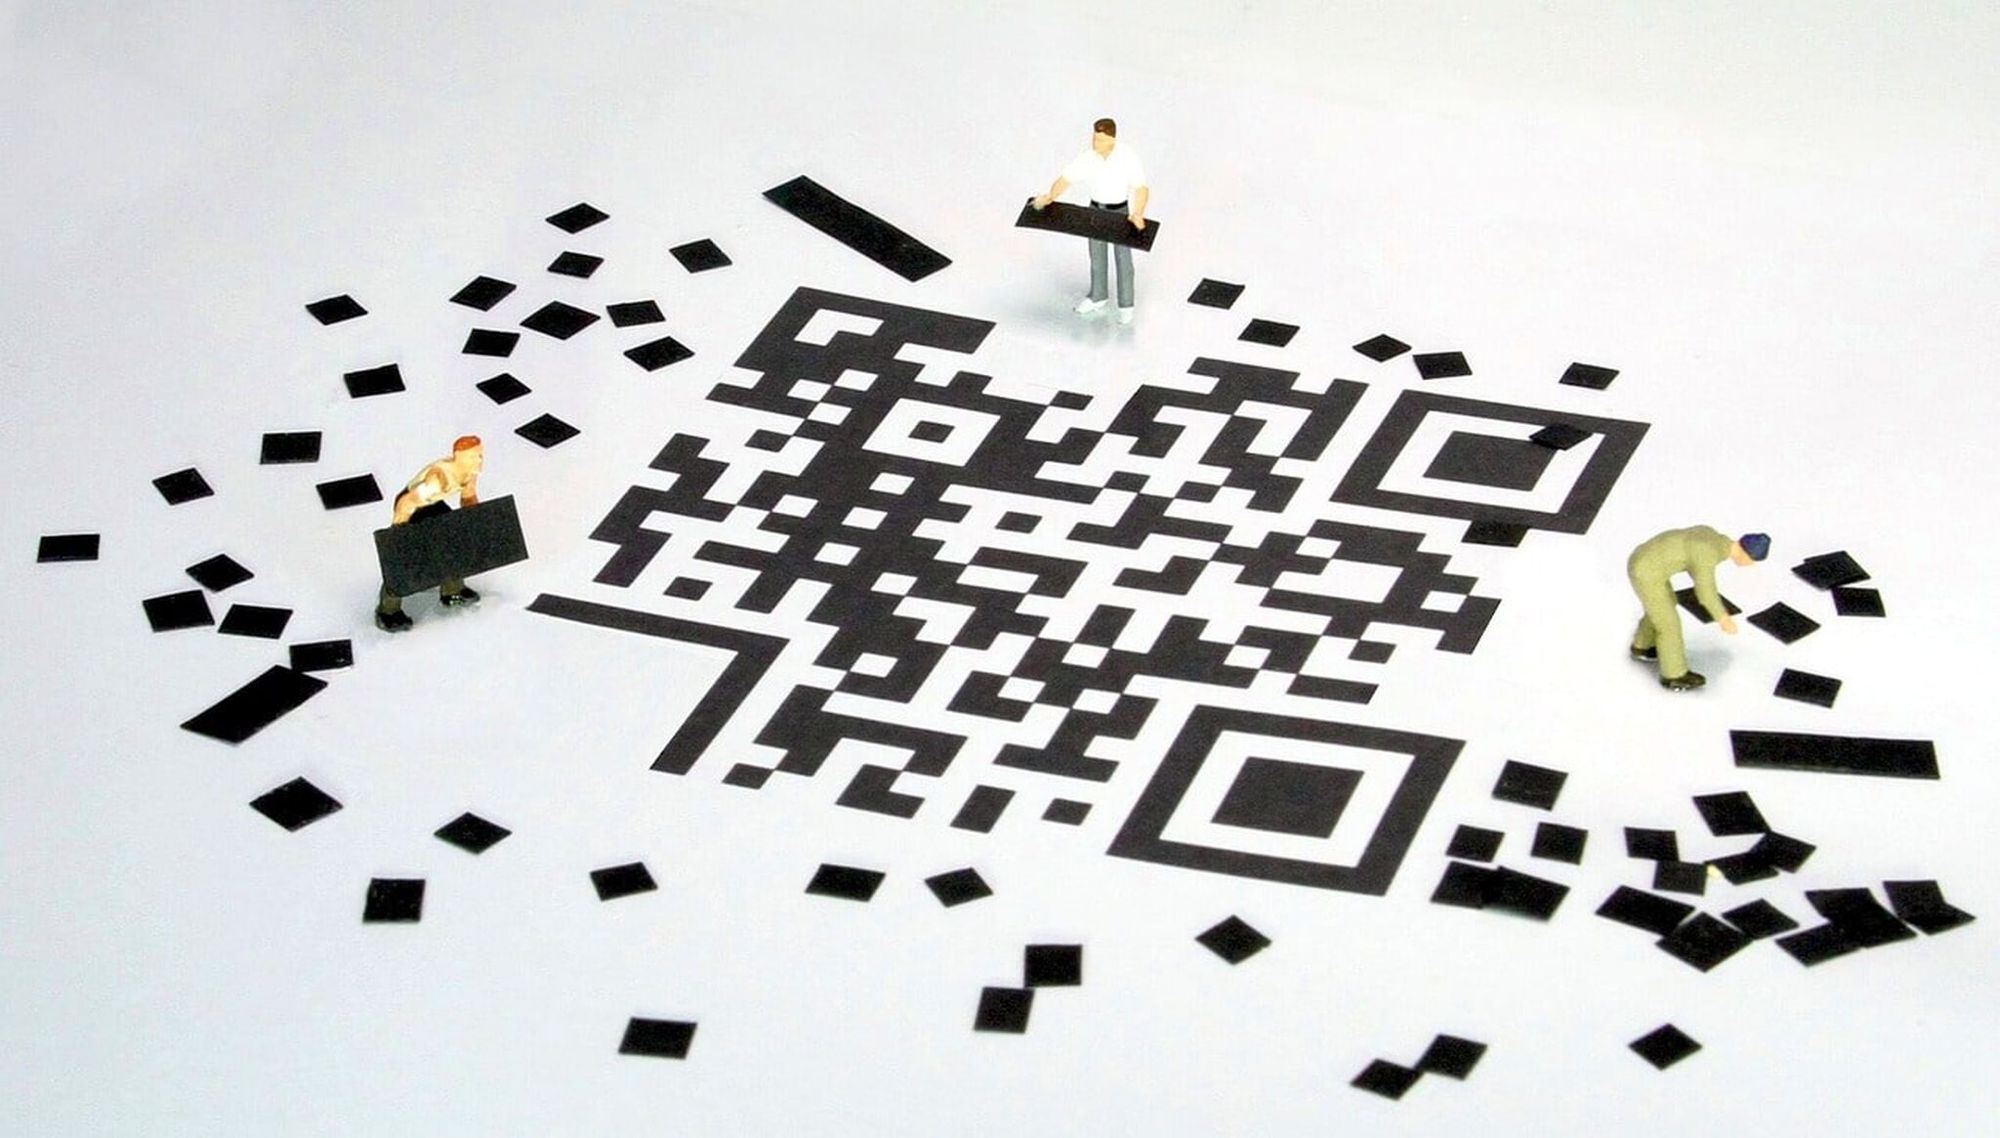 miniature figures creating a QR code